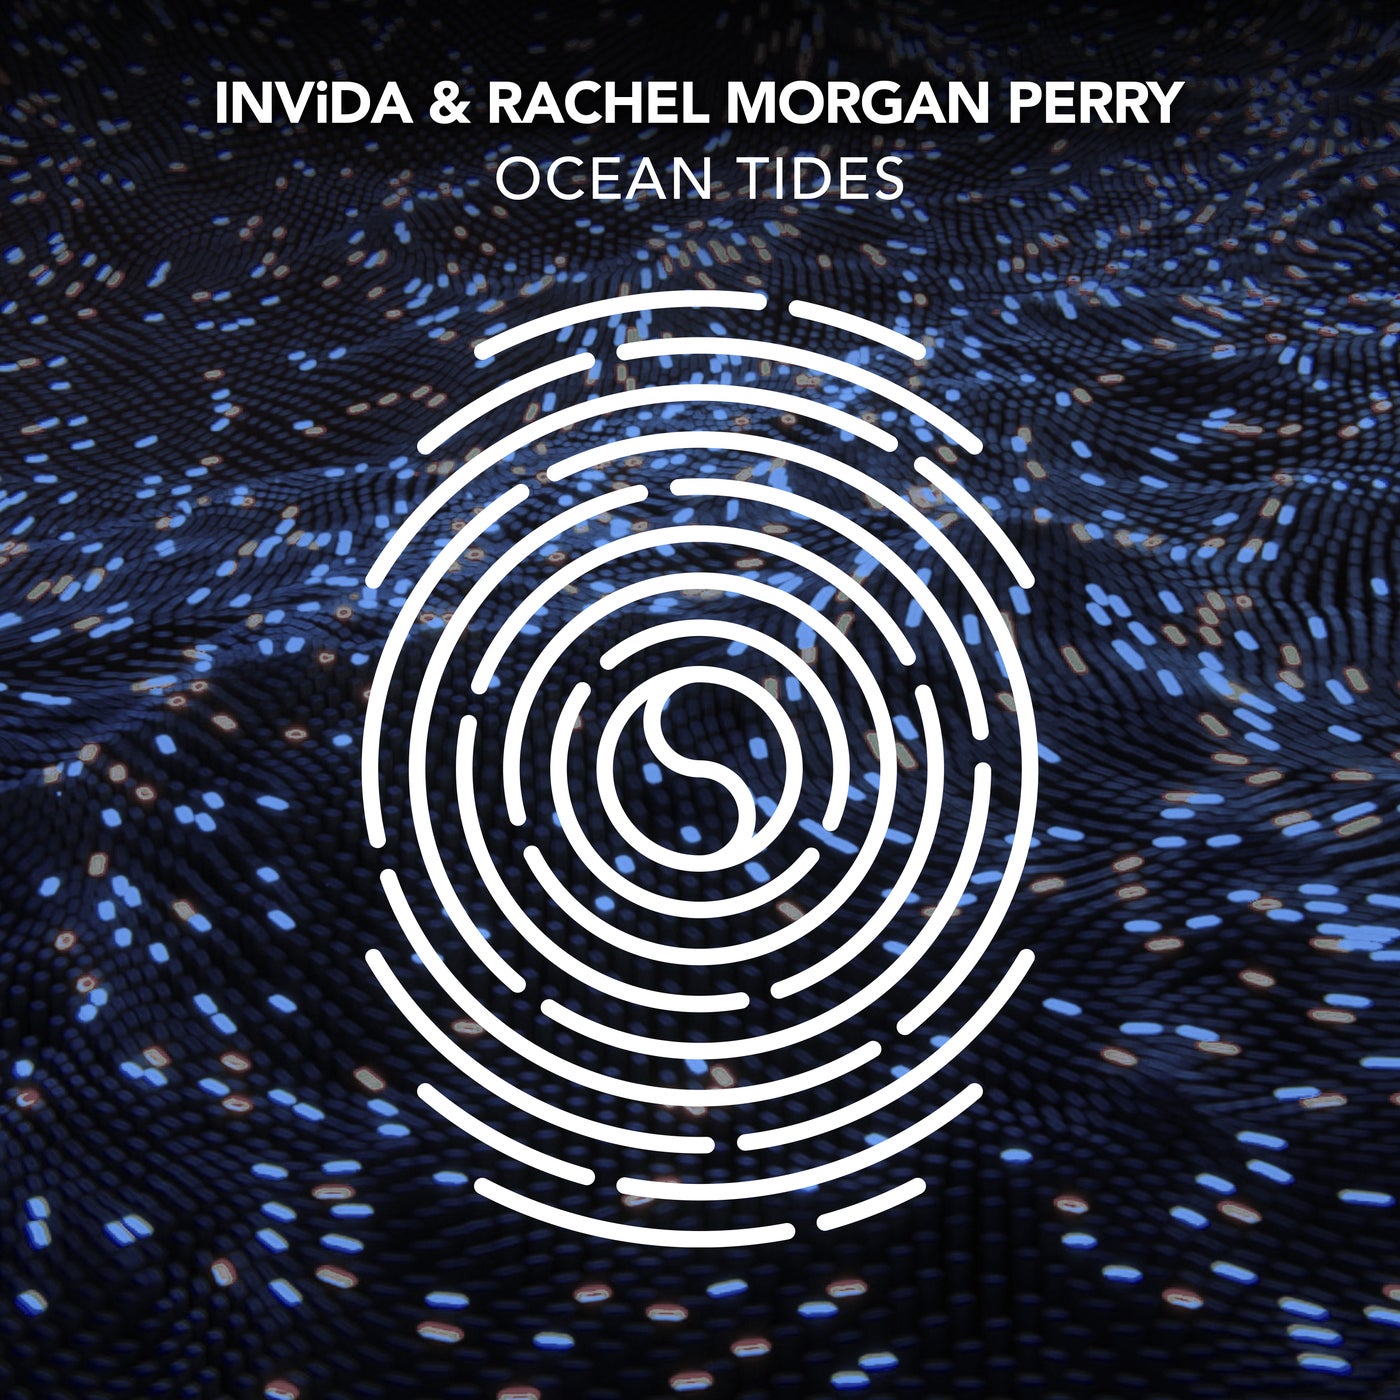 image cover: INViDA, Rachel Morgan Perry - Ocean Tides on Deeper Harmonies